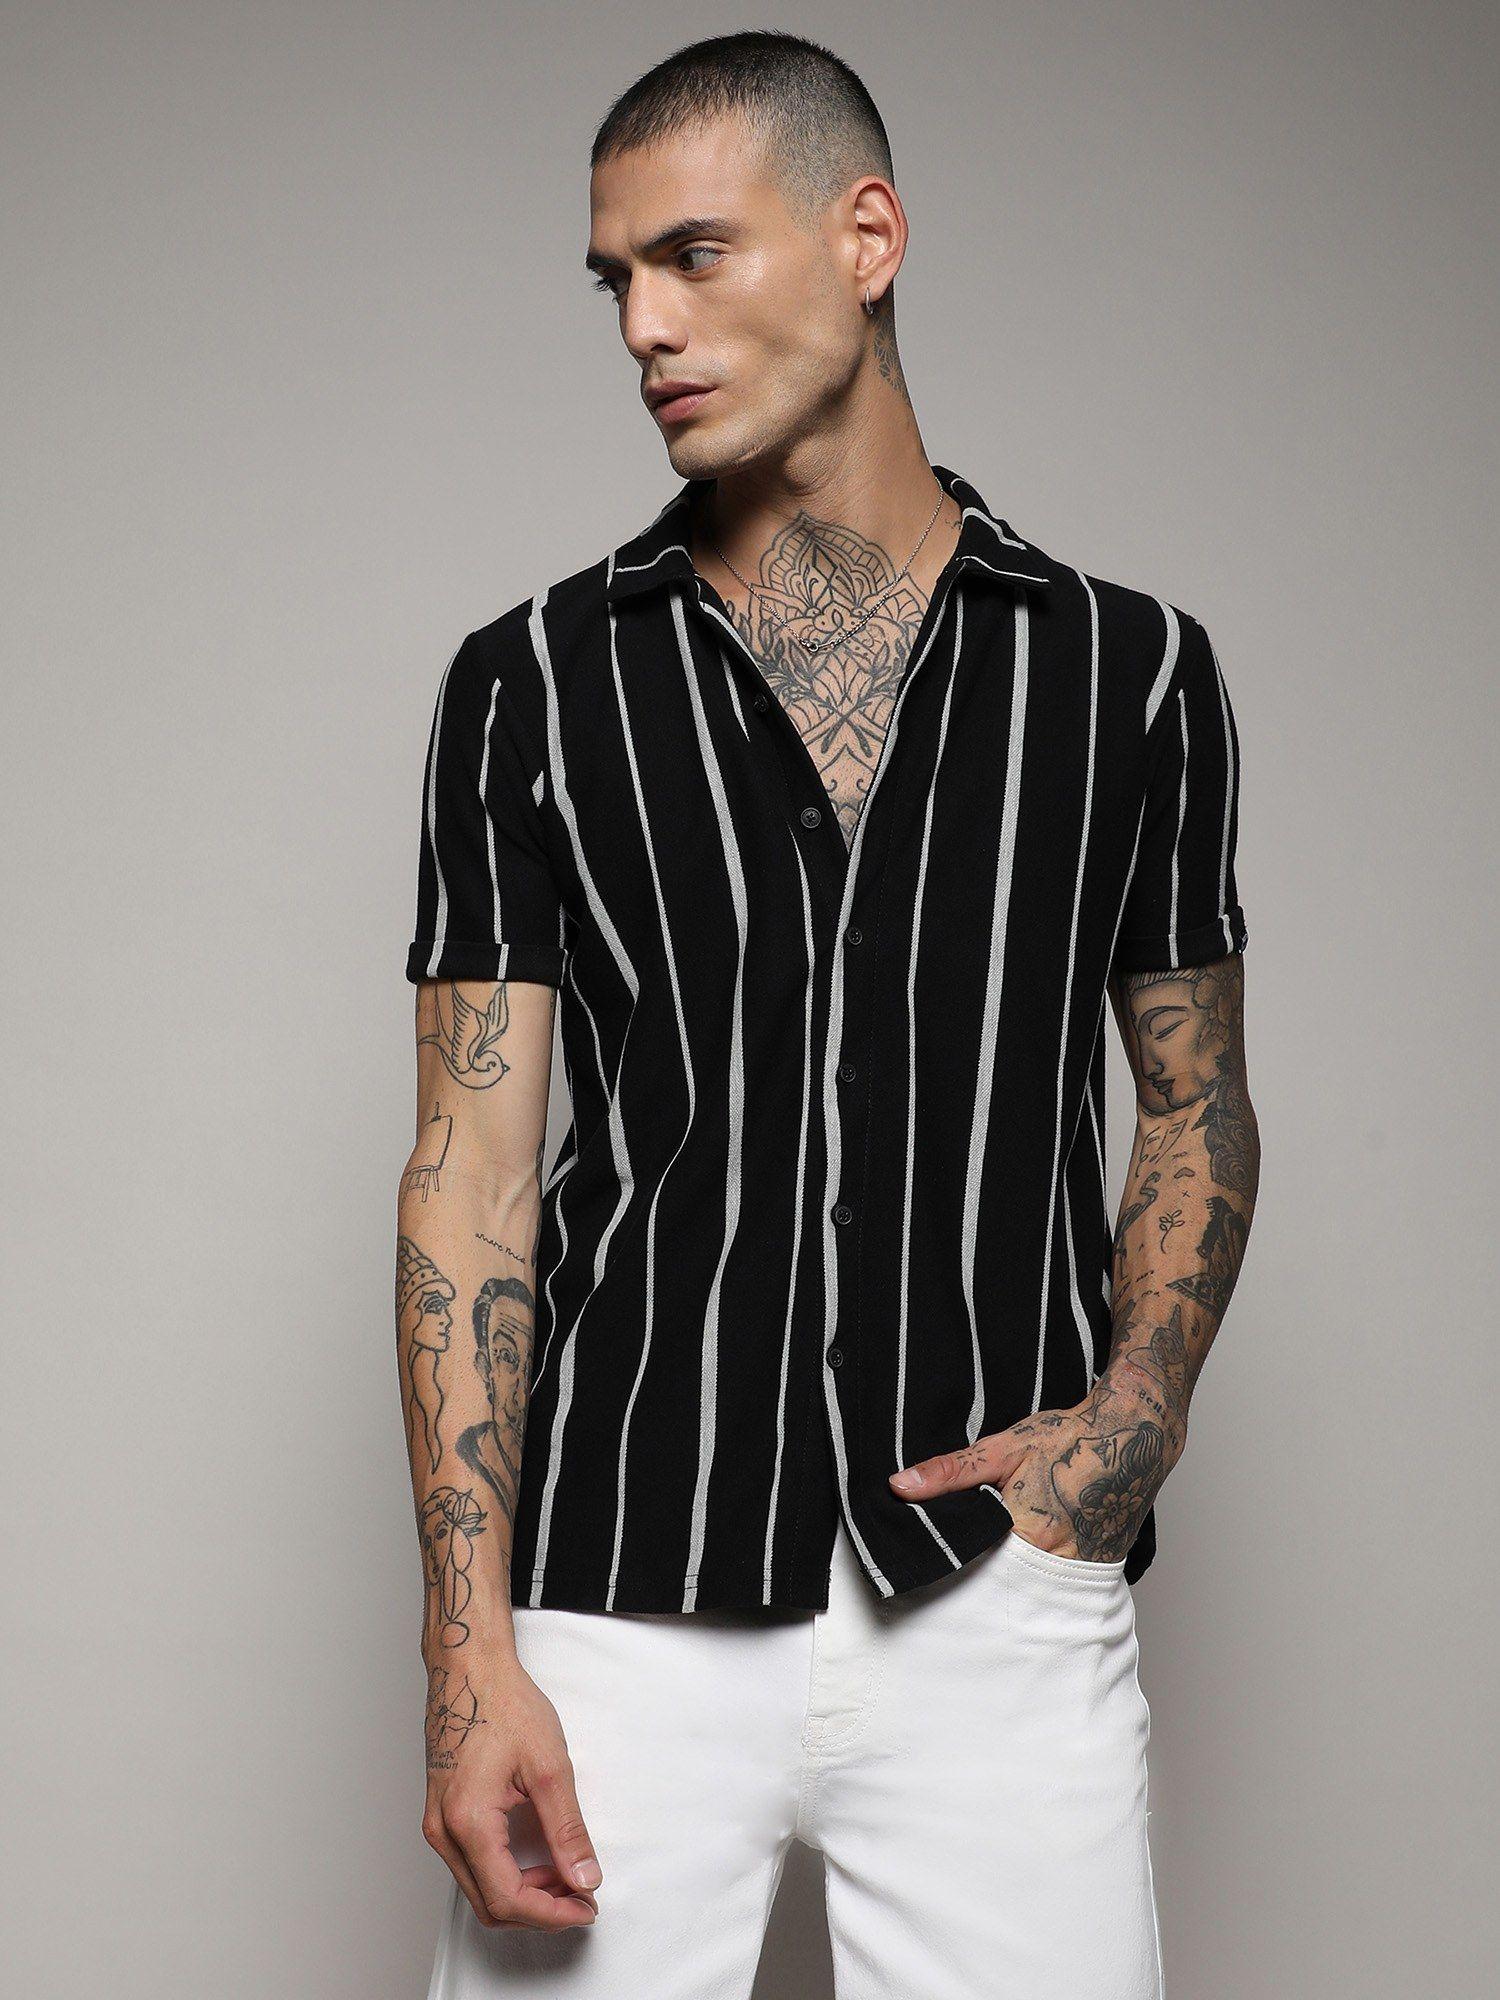 mens black & white pencil striped shirt